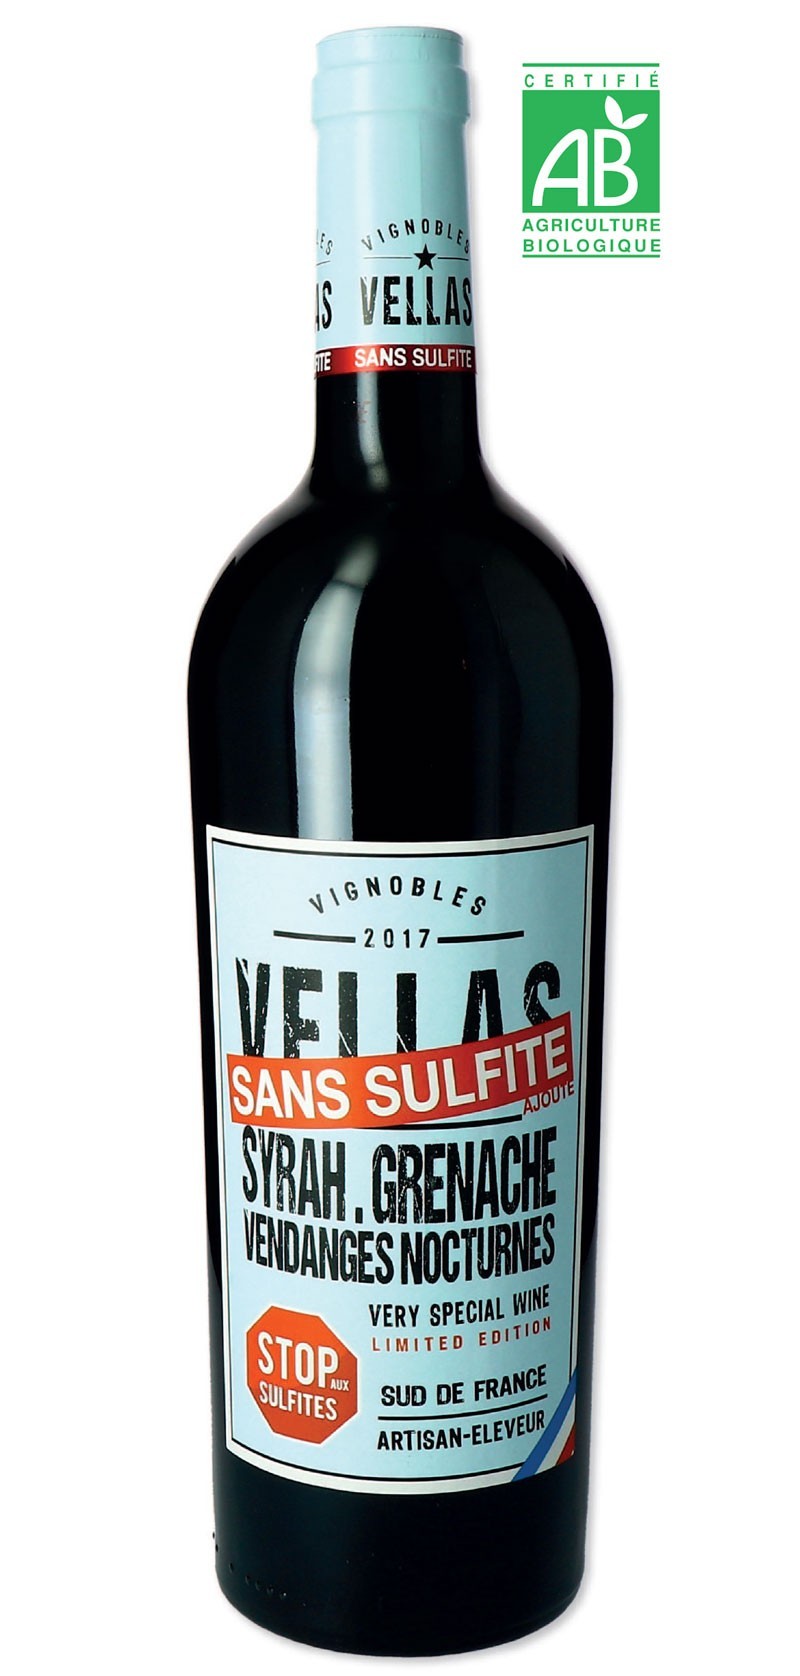 Vellas - Sulfite Free - ORGANIC - Red Wine 